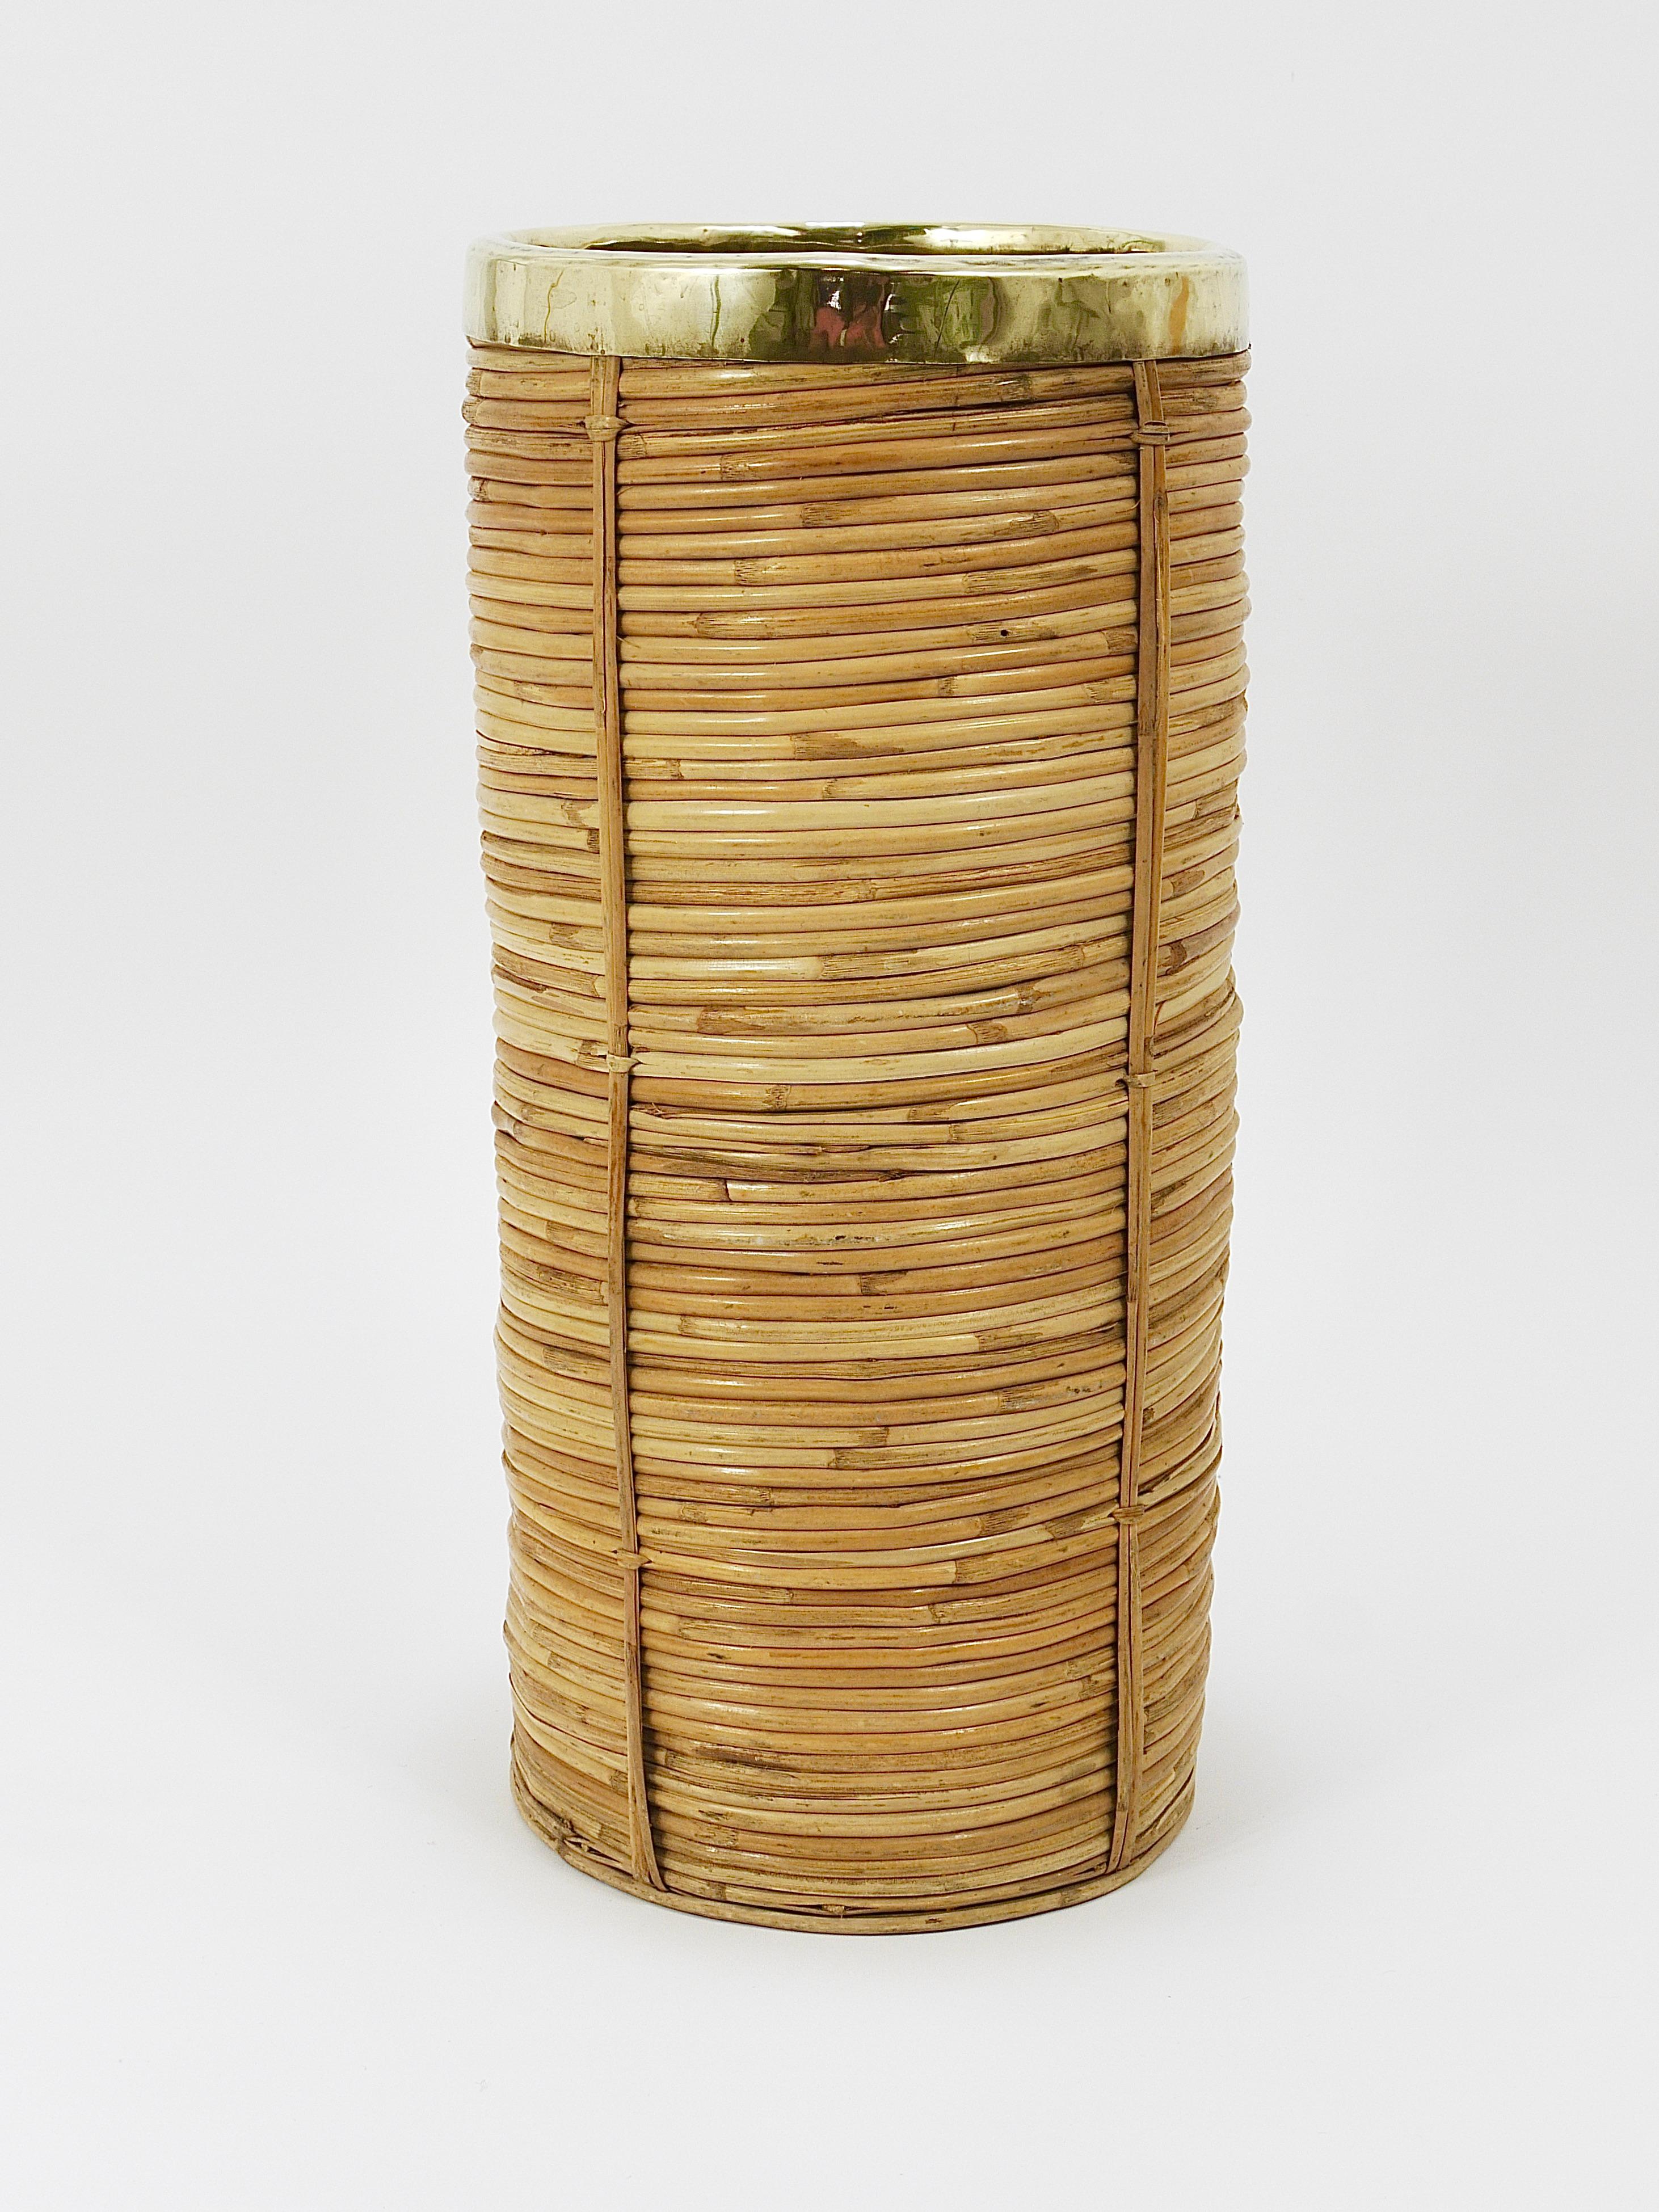 Porte-parapluies Hollywood Regency en bambou et laiton, Gabriella Crespi, Italie en vente 3